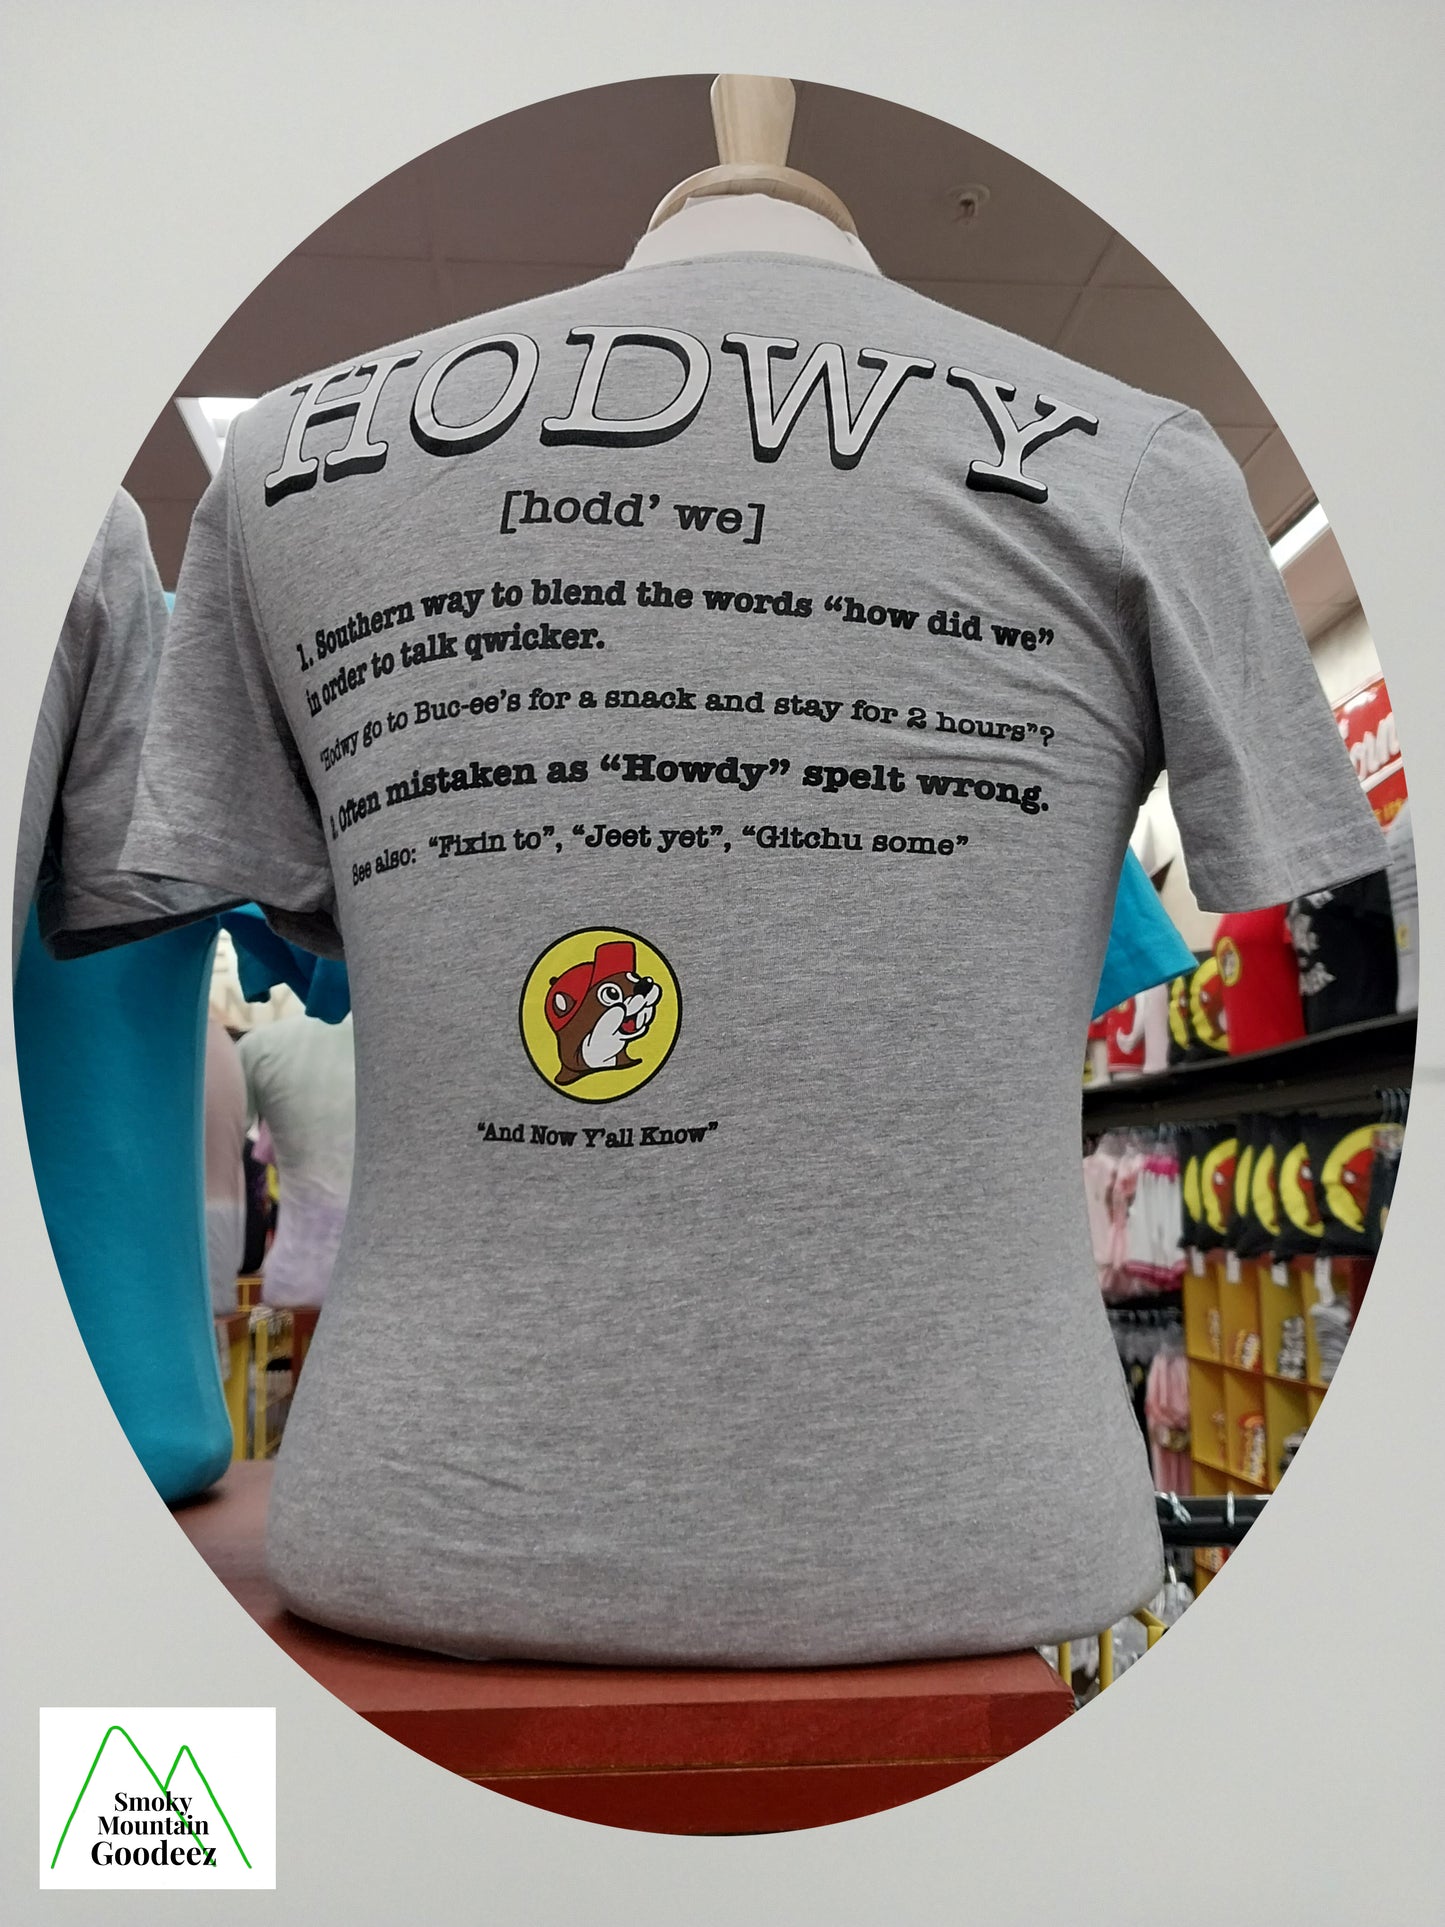 Buc-ee's "Hodwy" Slang Definition T-shirt